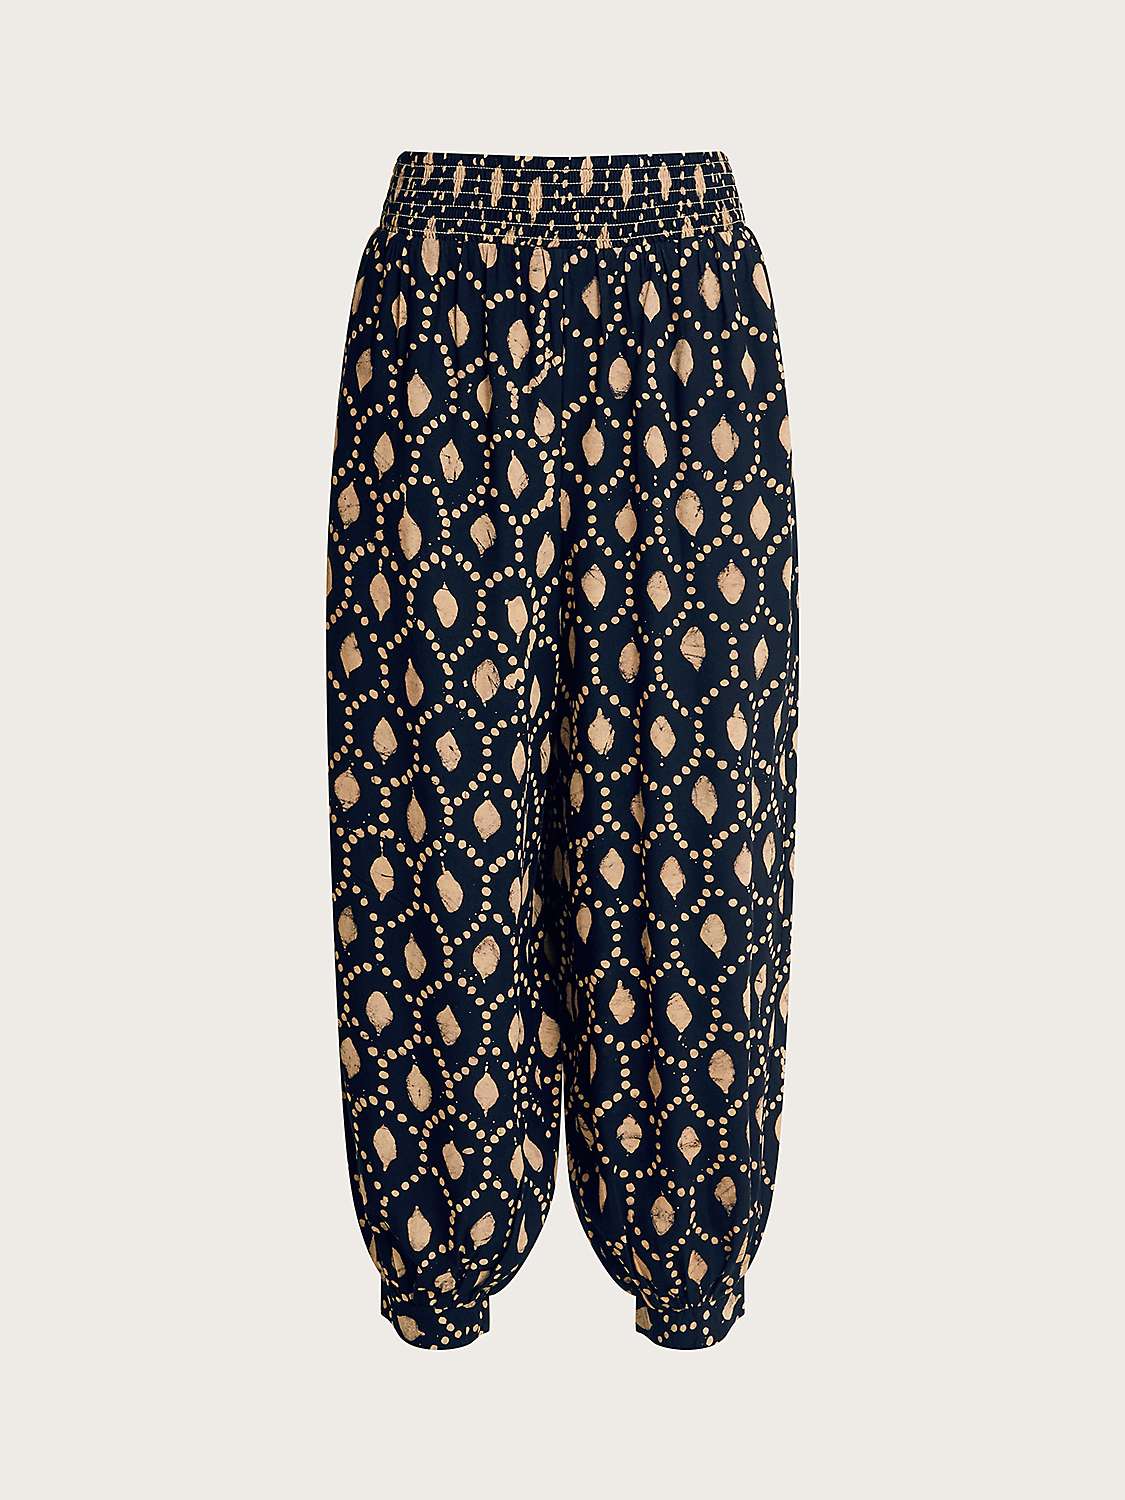 Buy Monsoon Rhea Batik Print Cuffed Hem Trousers, Black/Beige Online at johnlewis.com